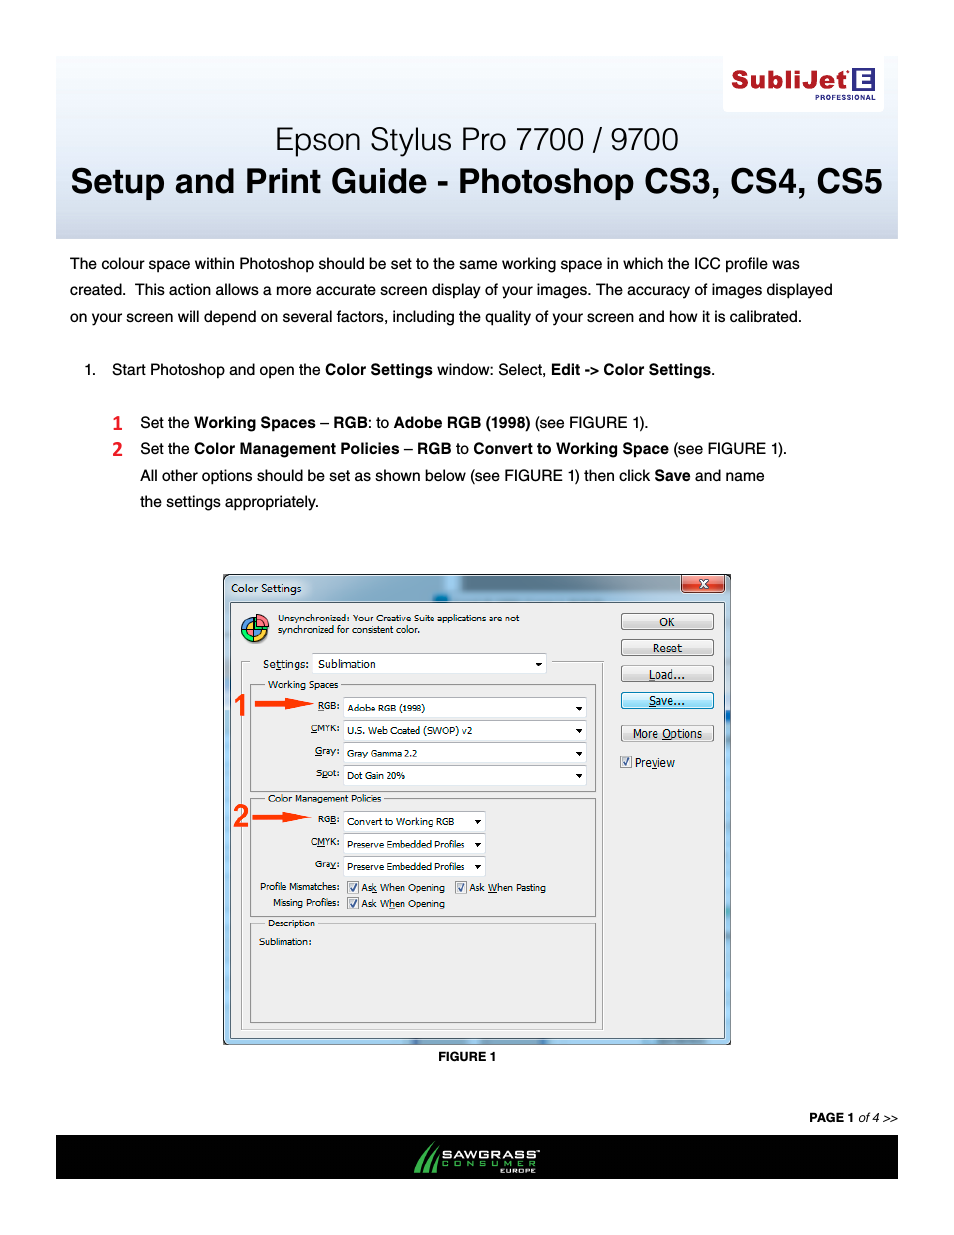 SubliJet E Epson Stylus Pro 7700 (Windows ICC Profile Setup): Print & Setup Guide Photoshop CS3 - CS5